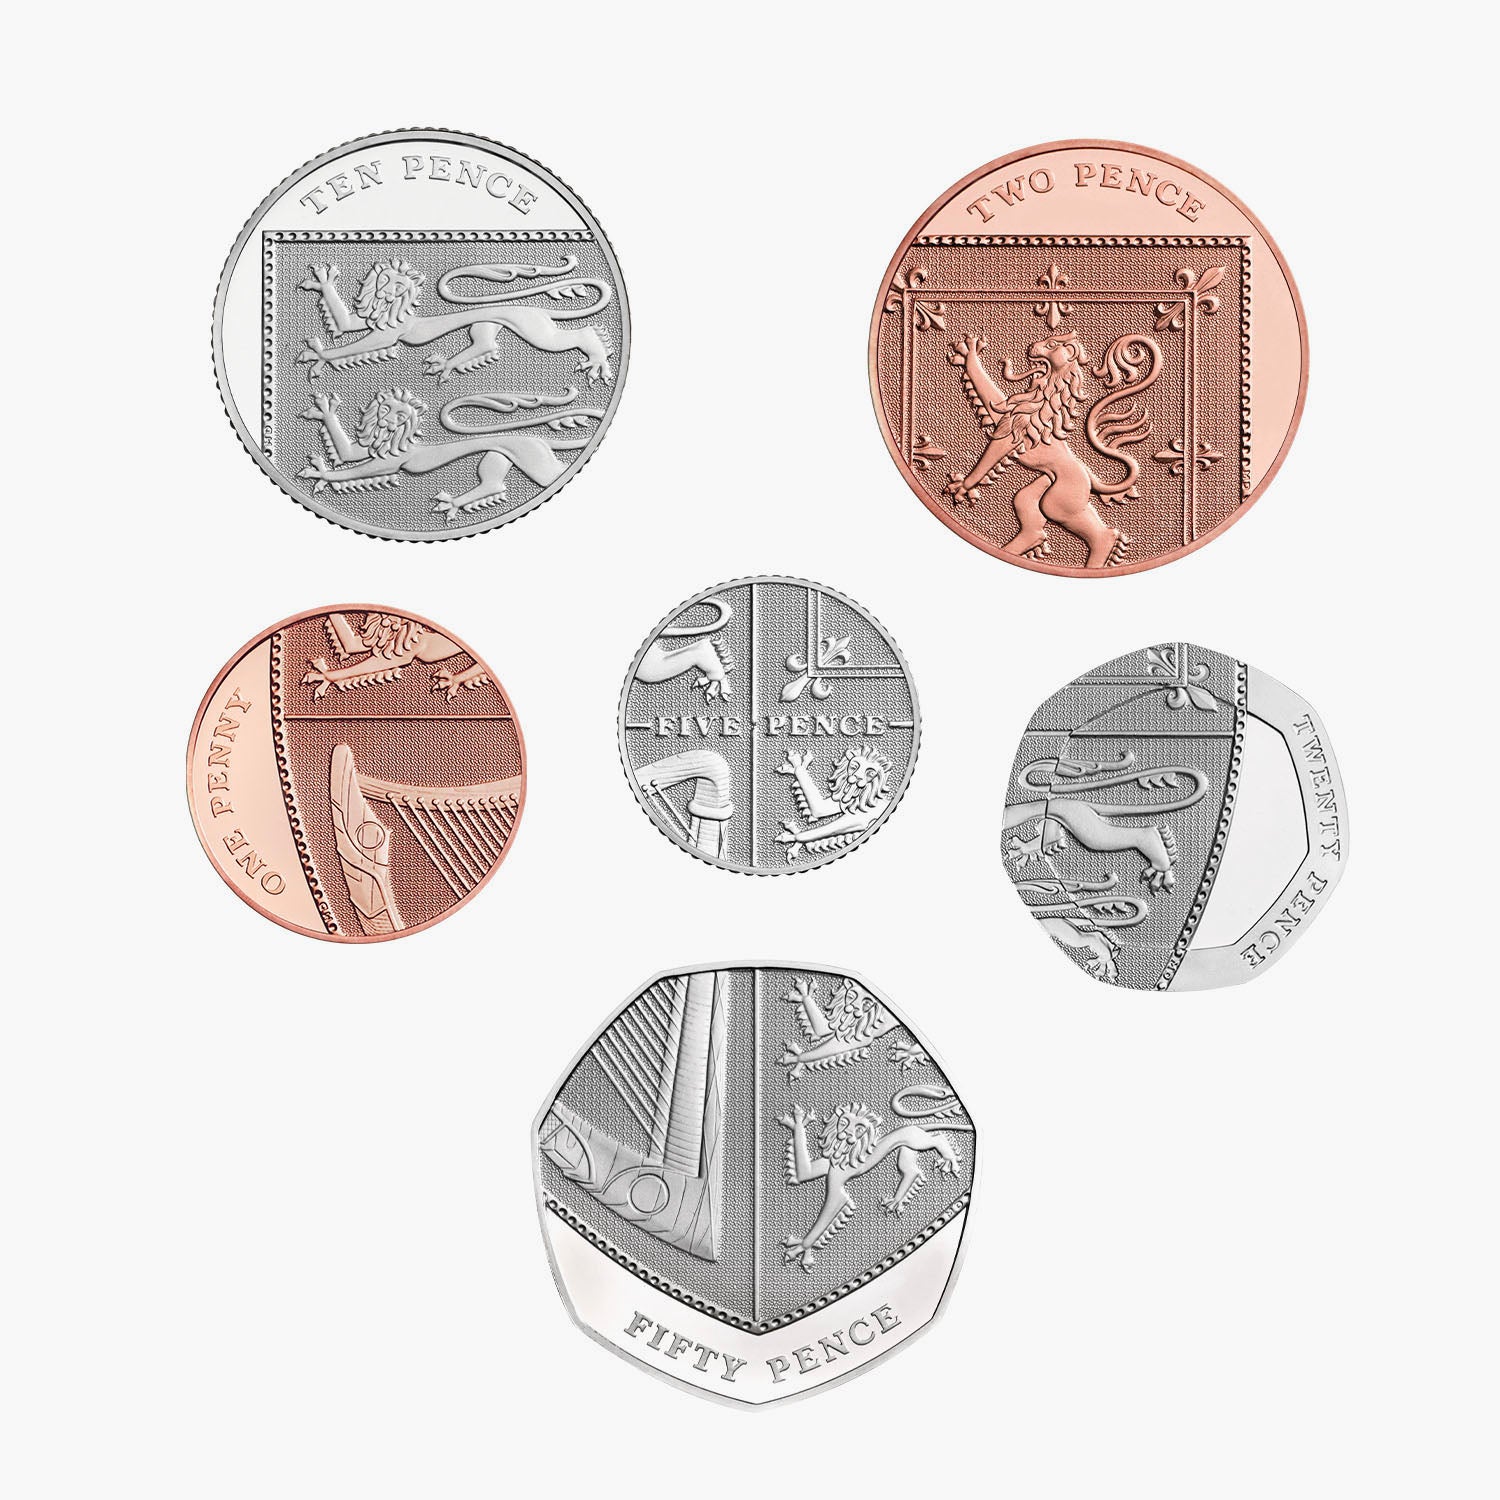 The 2022 United Kingdom Brilliant Uncirculated Definitive Coin Set